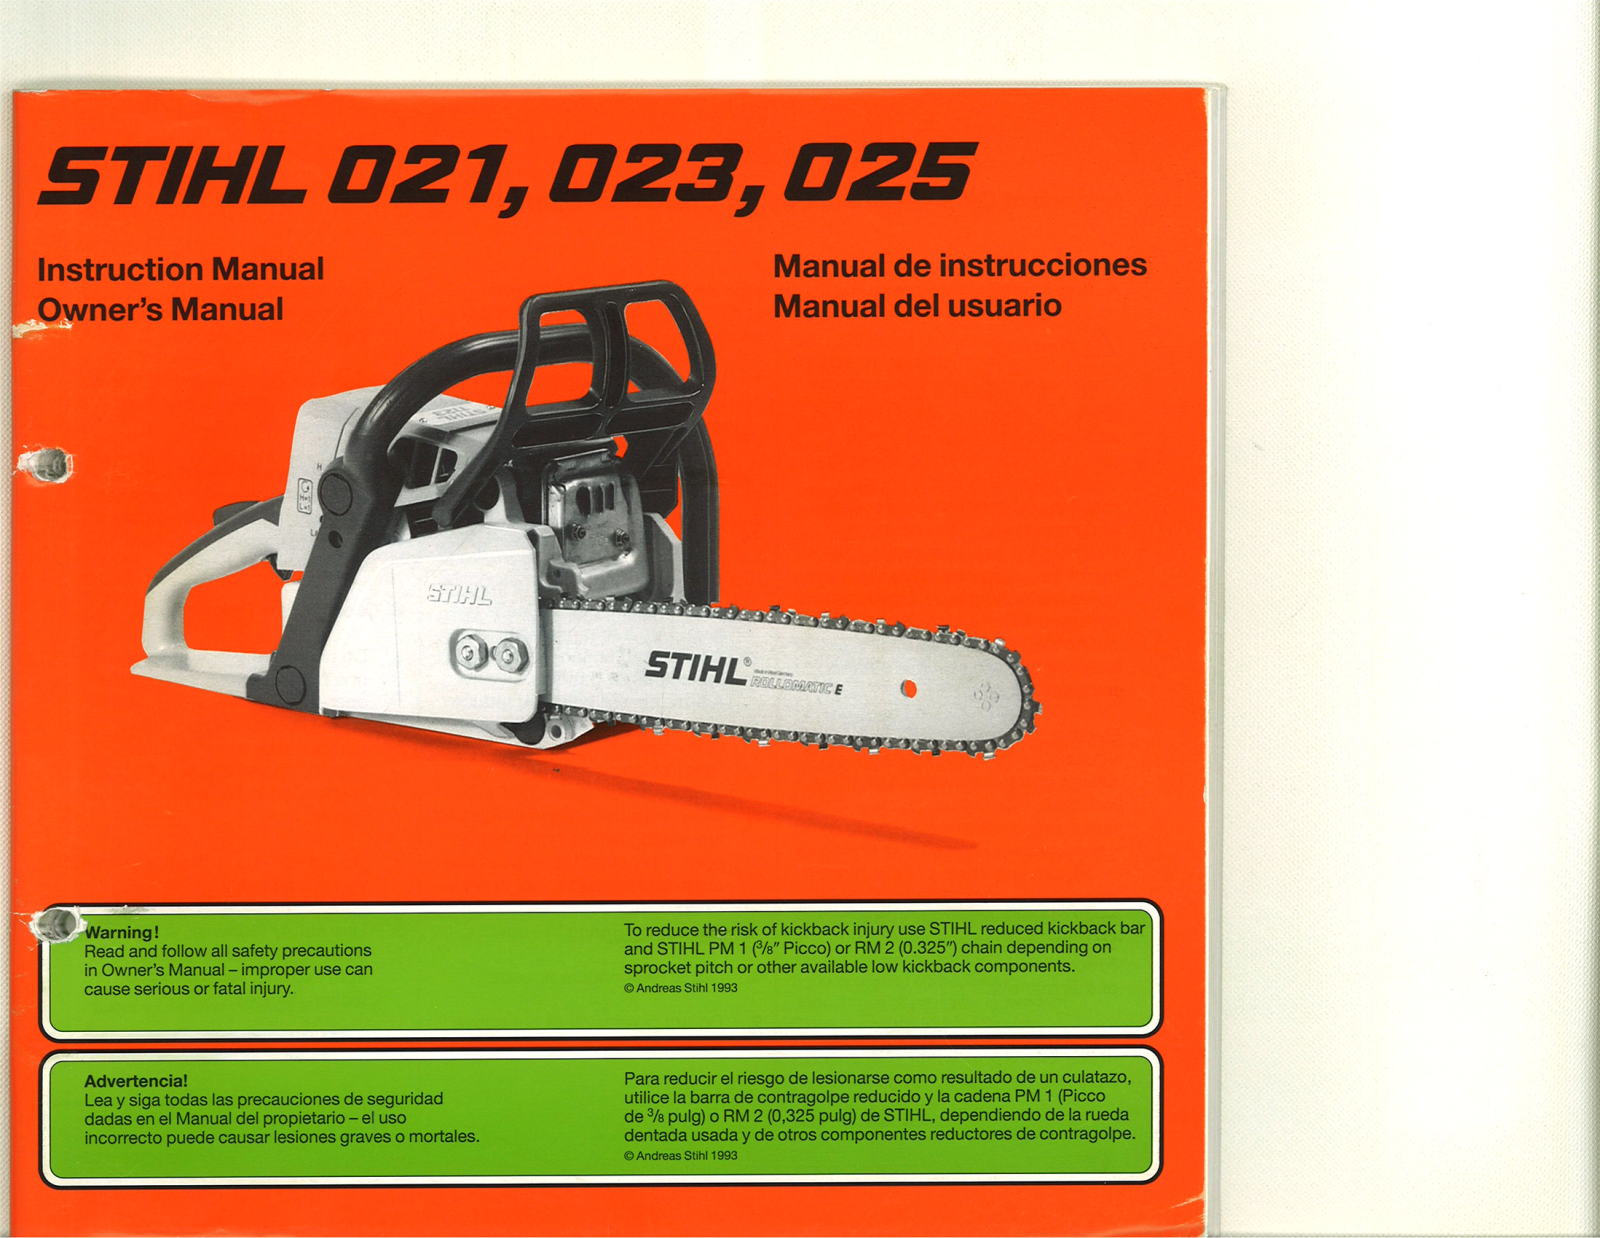 STIHL 023, 021, 025 Owner's Manual